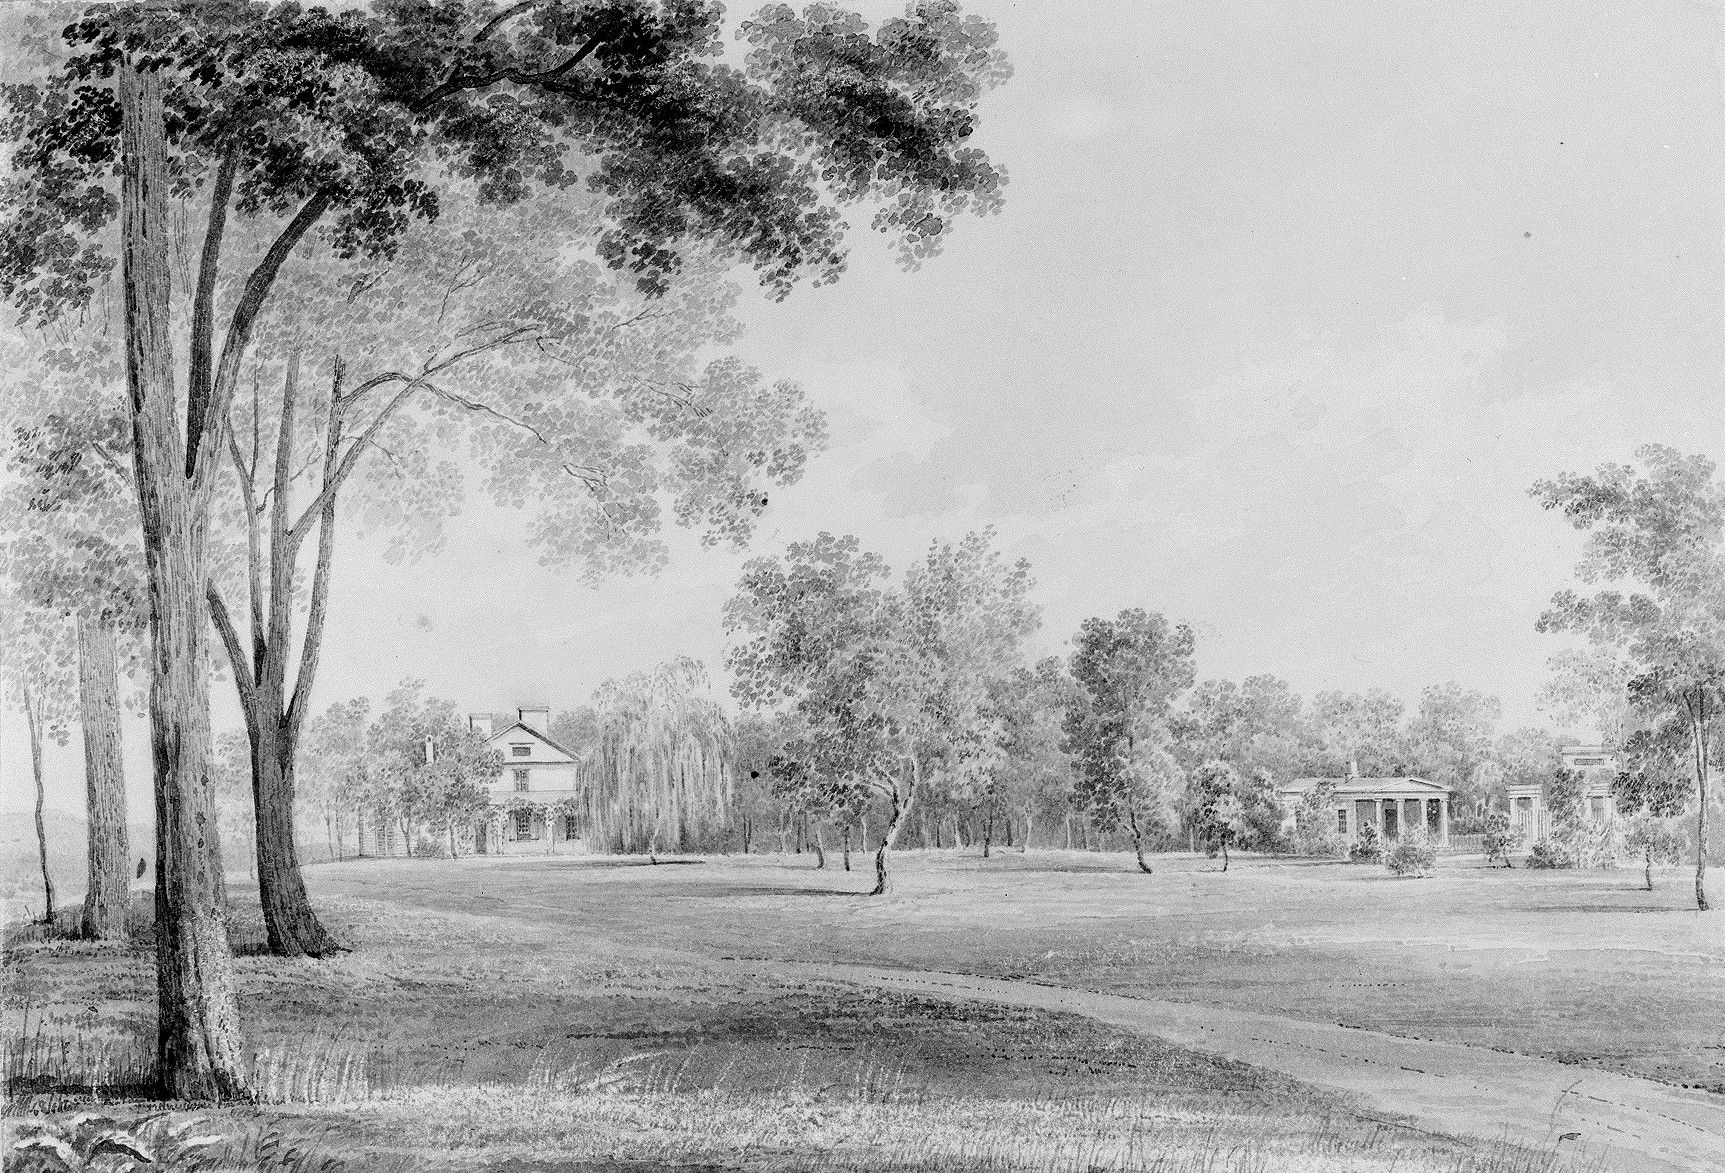 View of the David Hosack Estate Hyde Park New York from the South from Hosack Album by Thomas Kelah Wharton